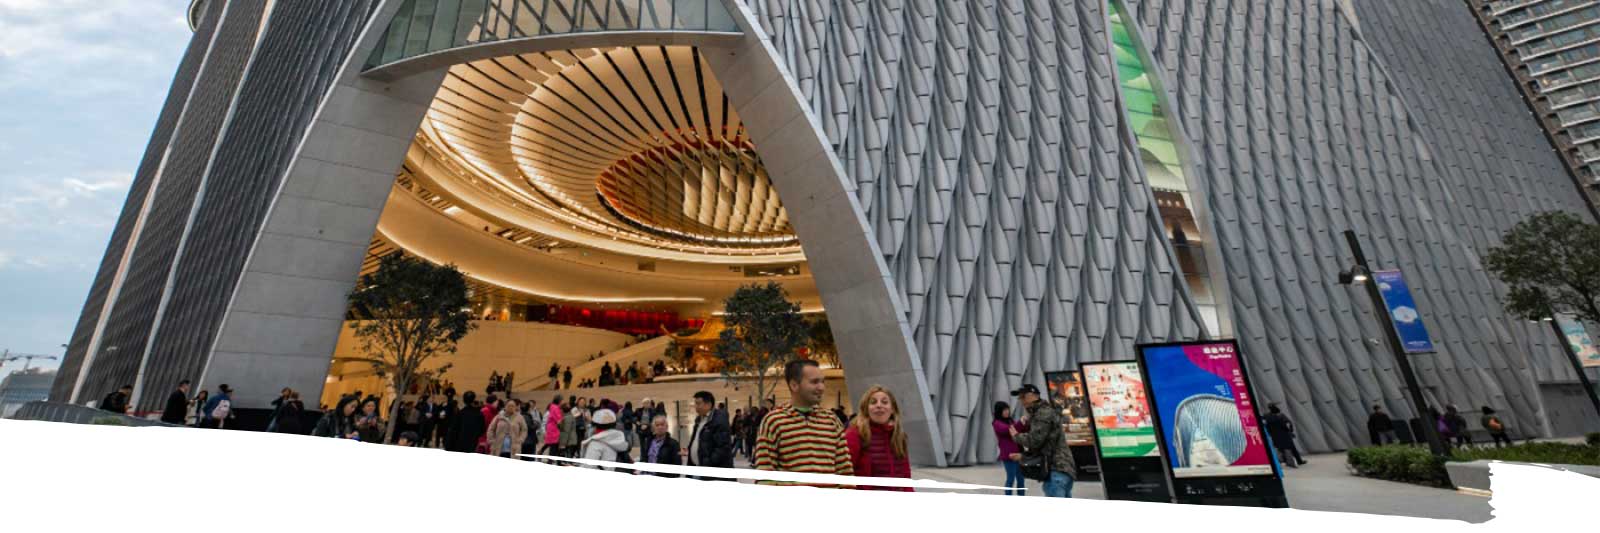  Xiqu Centre - Hong Kong Chinese opera venue